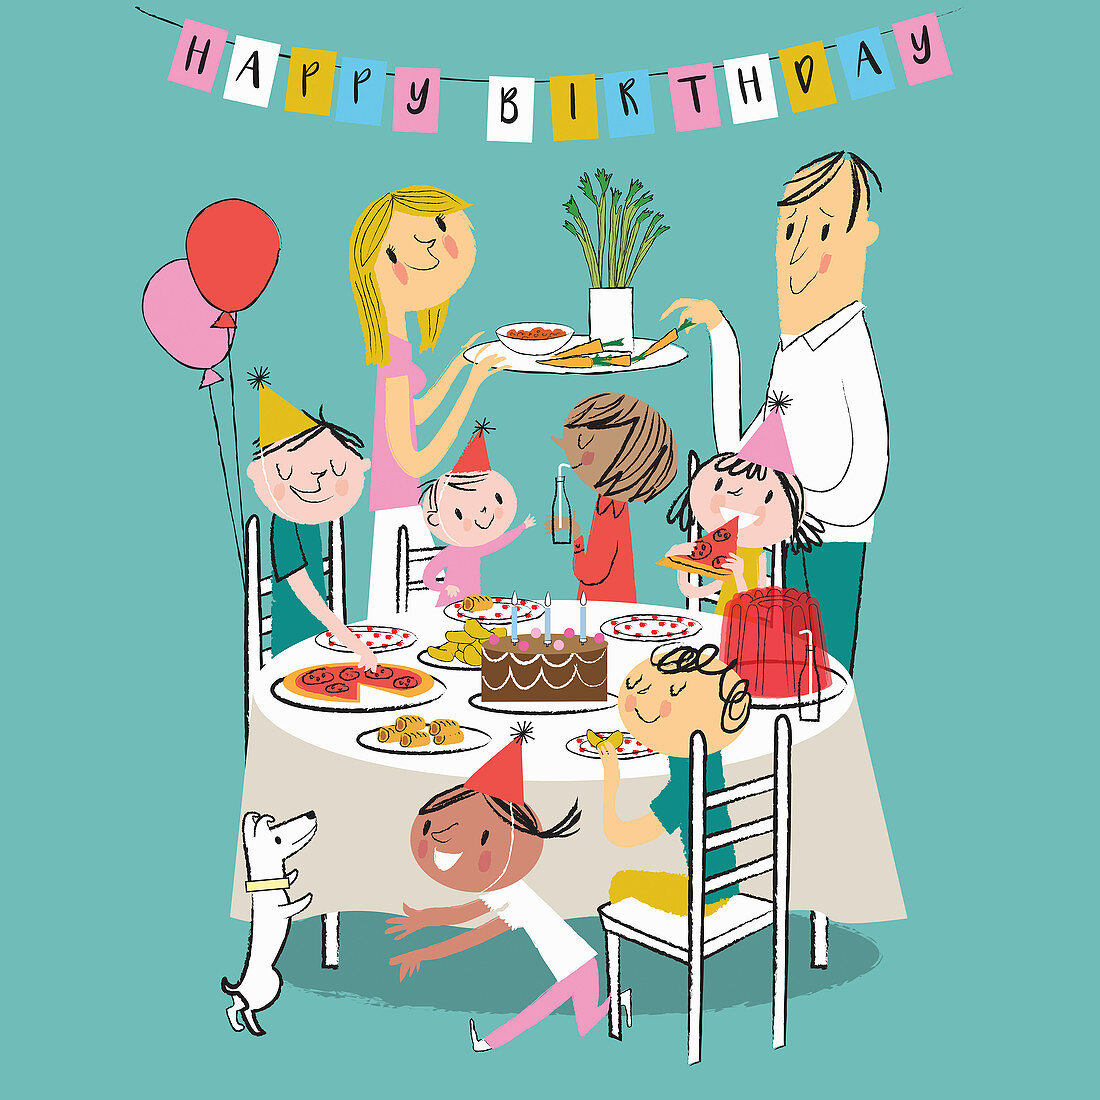 Children eating at birthday tea party, illustration